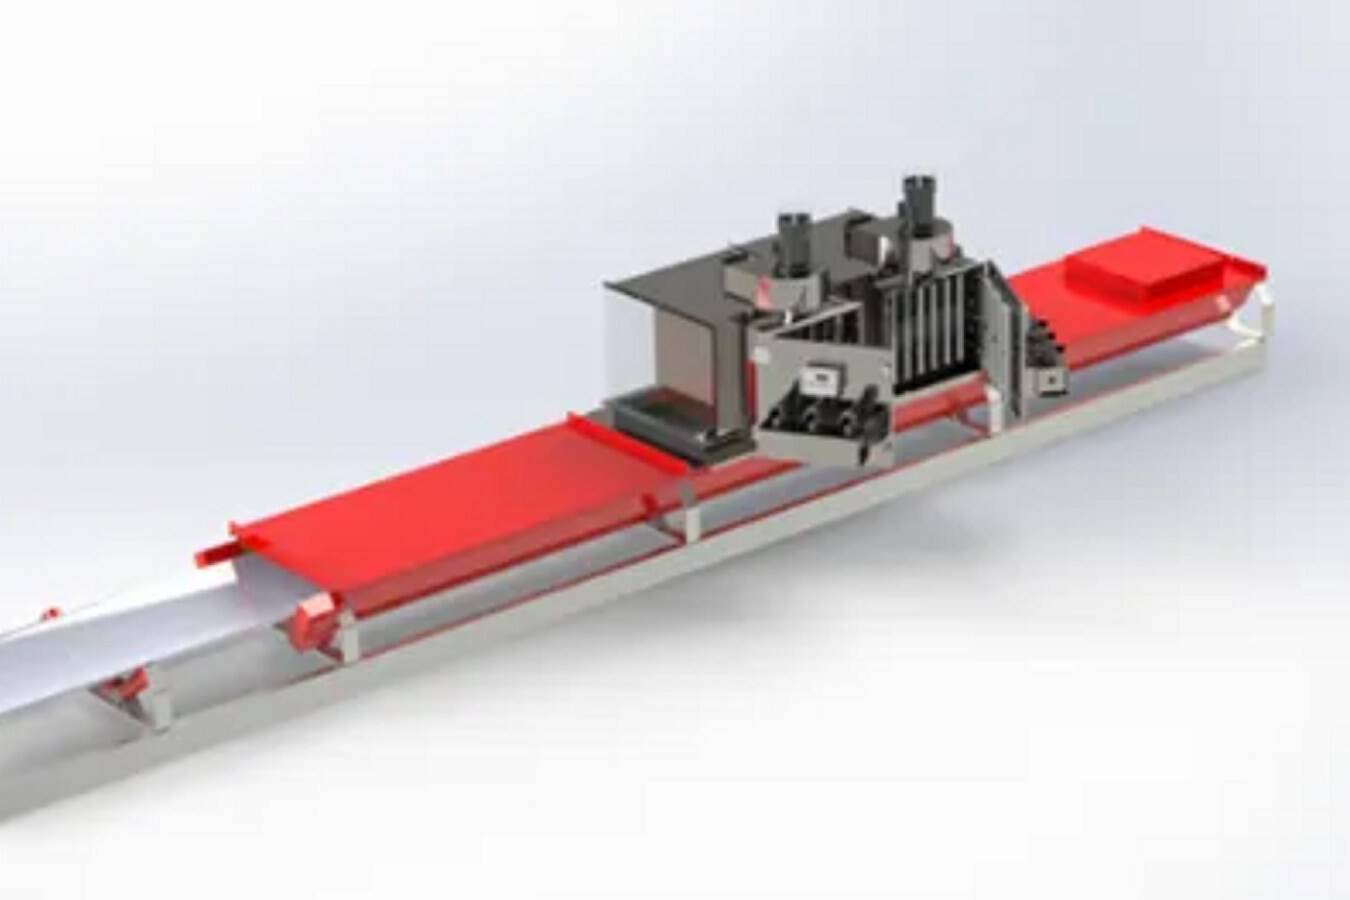 DusTek Spot Filter installed on belt conveyor